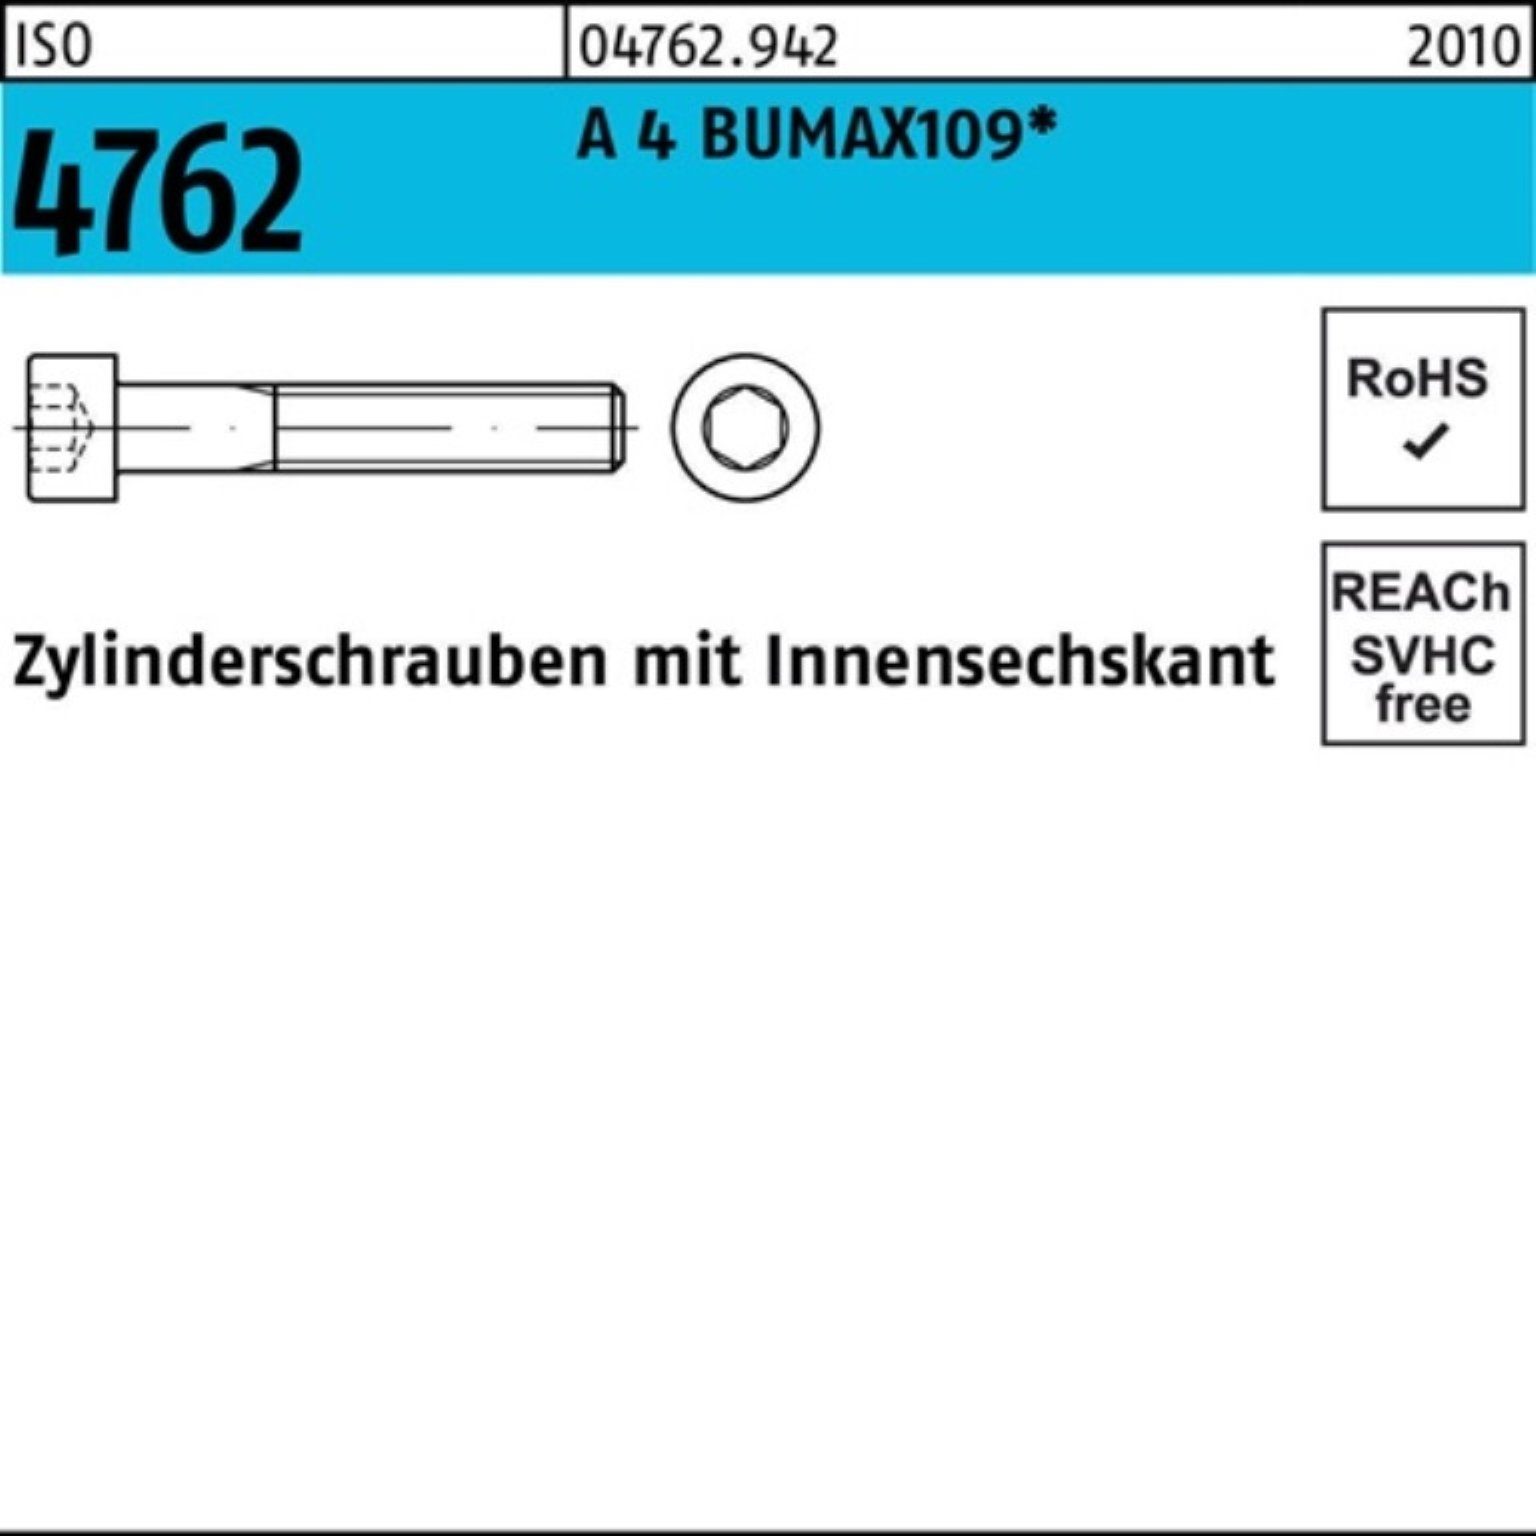 Bufab Zylinderschraube 100er Pack Zylinderschraube M10x A 30 BUMAX109 4762 Innen-6kt 50 4 ISO